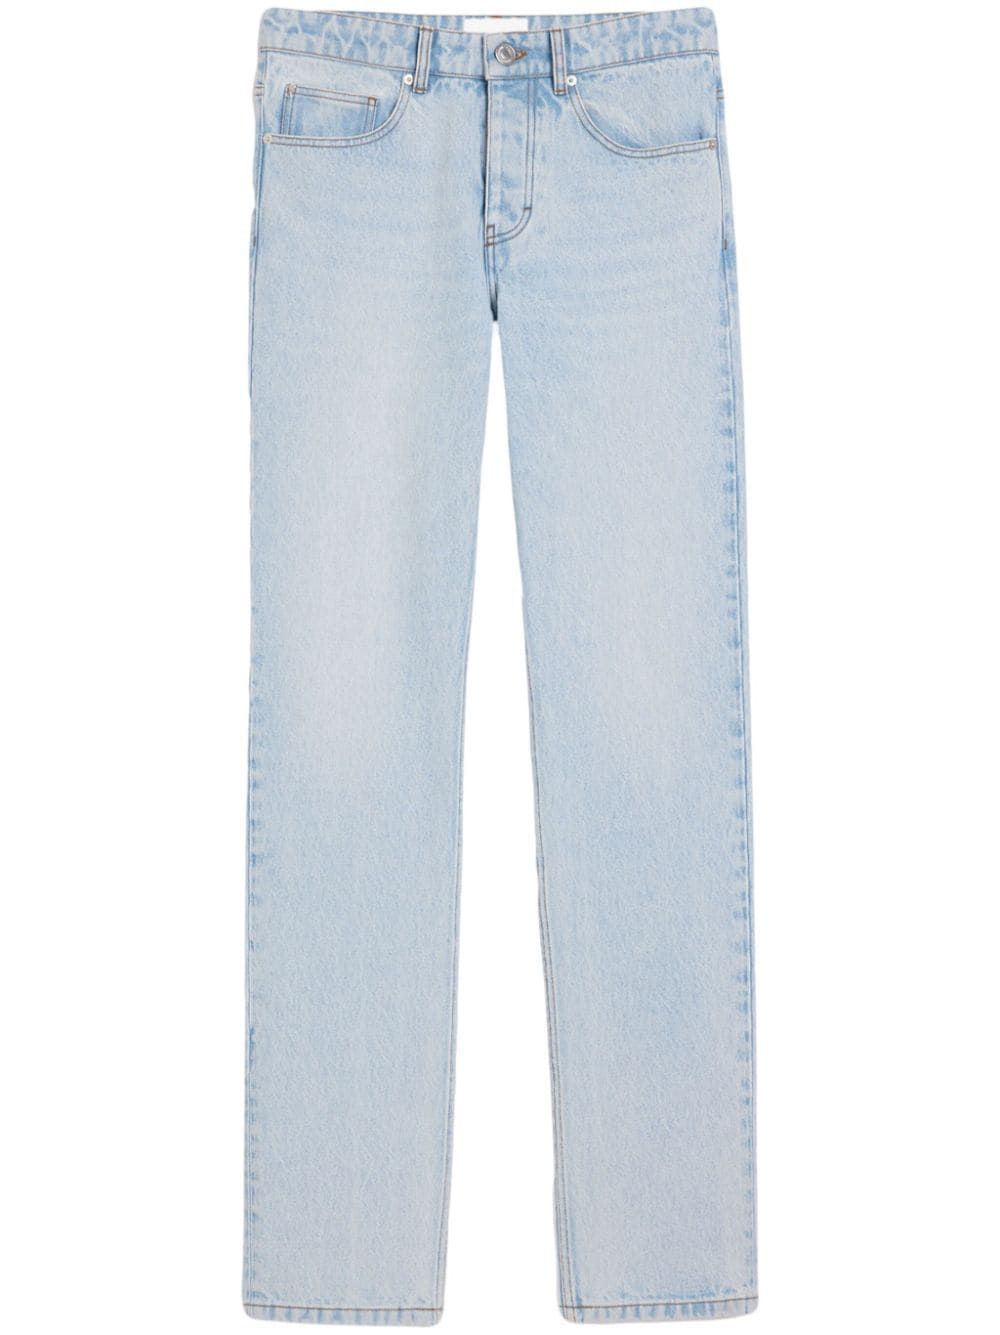 Shop Ami Alexandre Mattiussi Classic Fit Bleujavel Jeans For Men In Blue